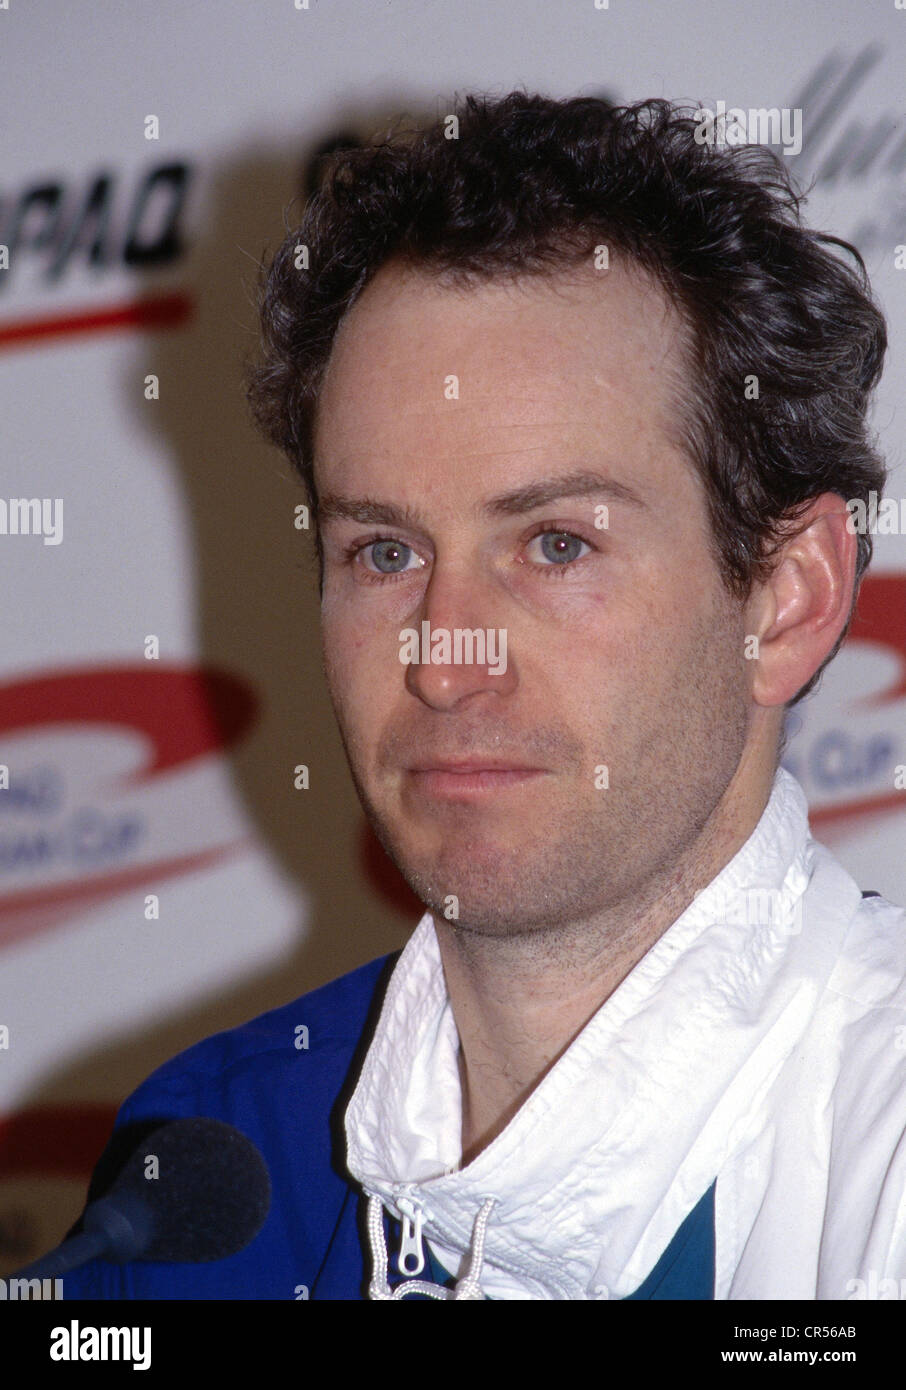 McEnroe, John, * 16.2.1959, US tennis player, portrait, at a press conference, circa 1985, Stock Photo